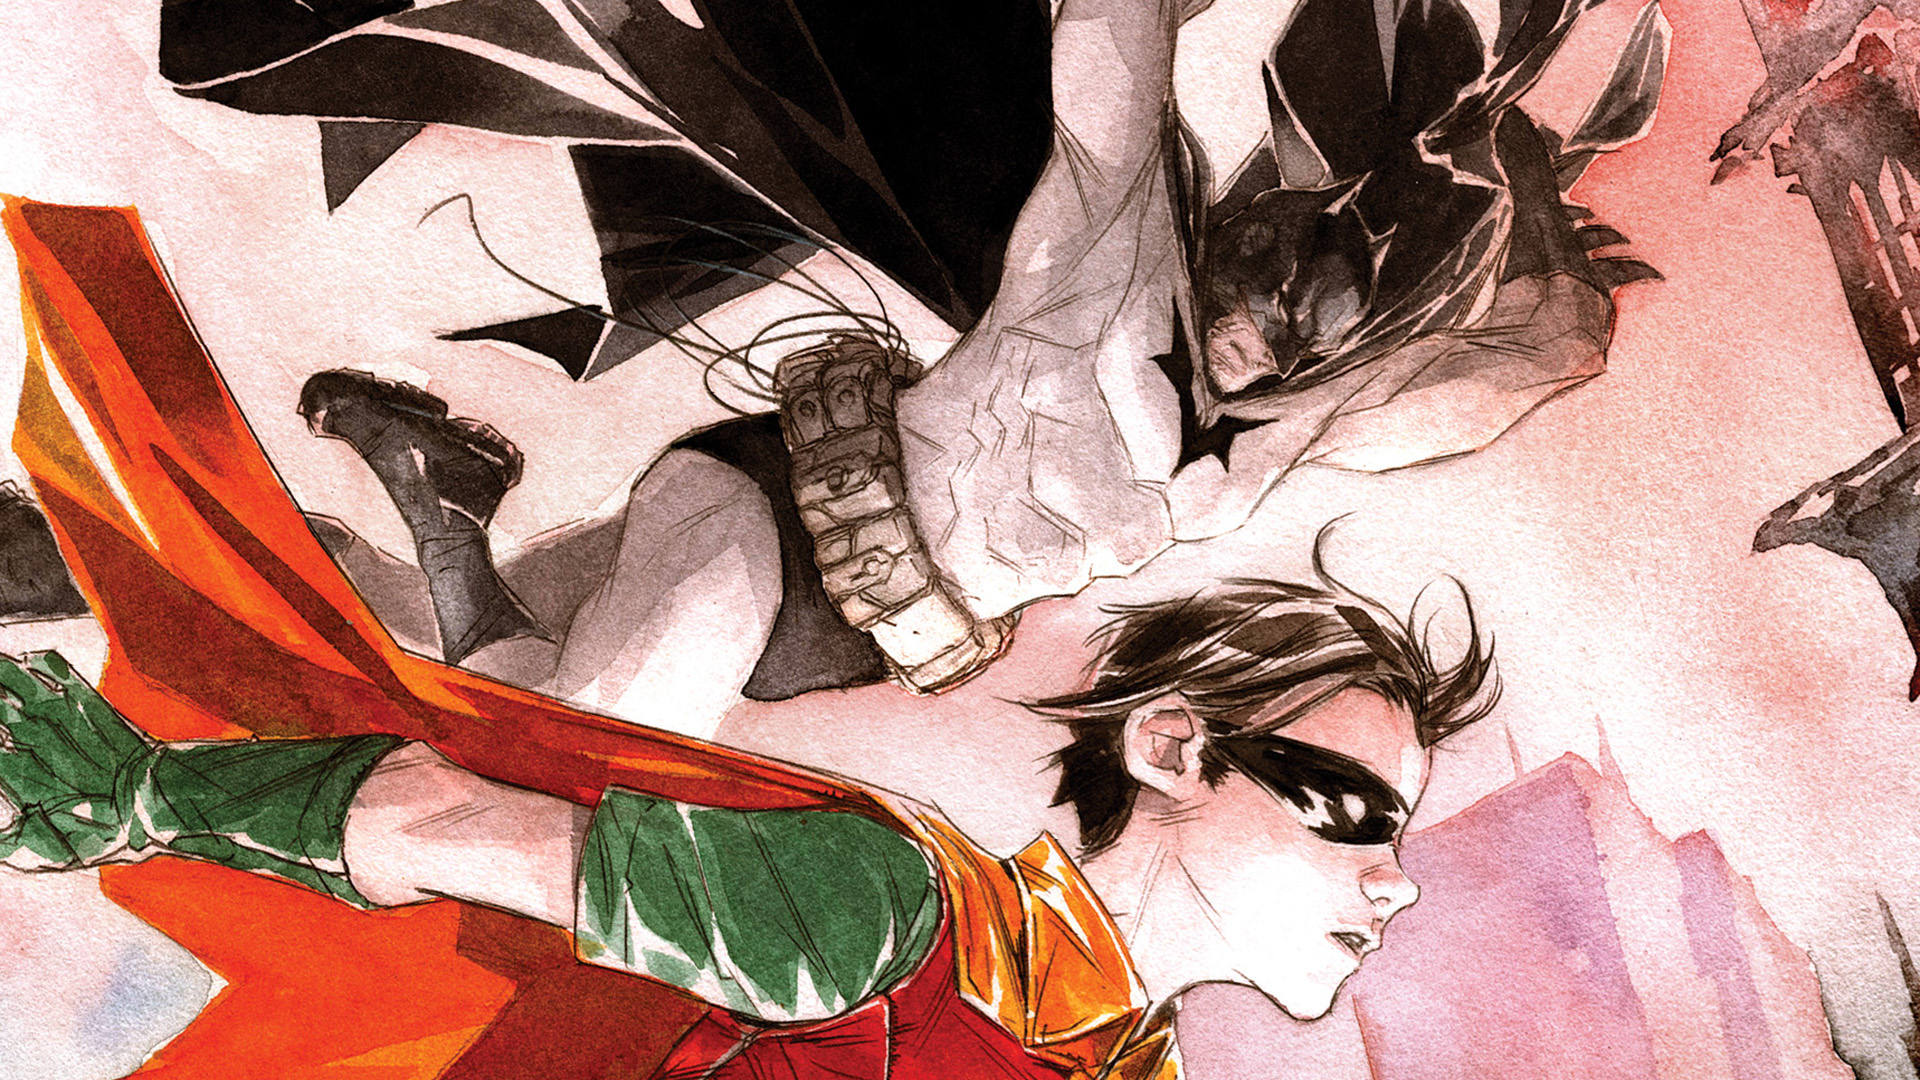 Robin et Batman #1